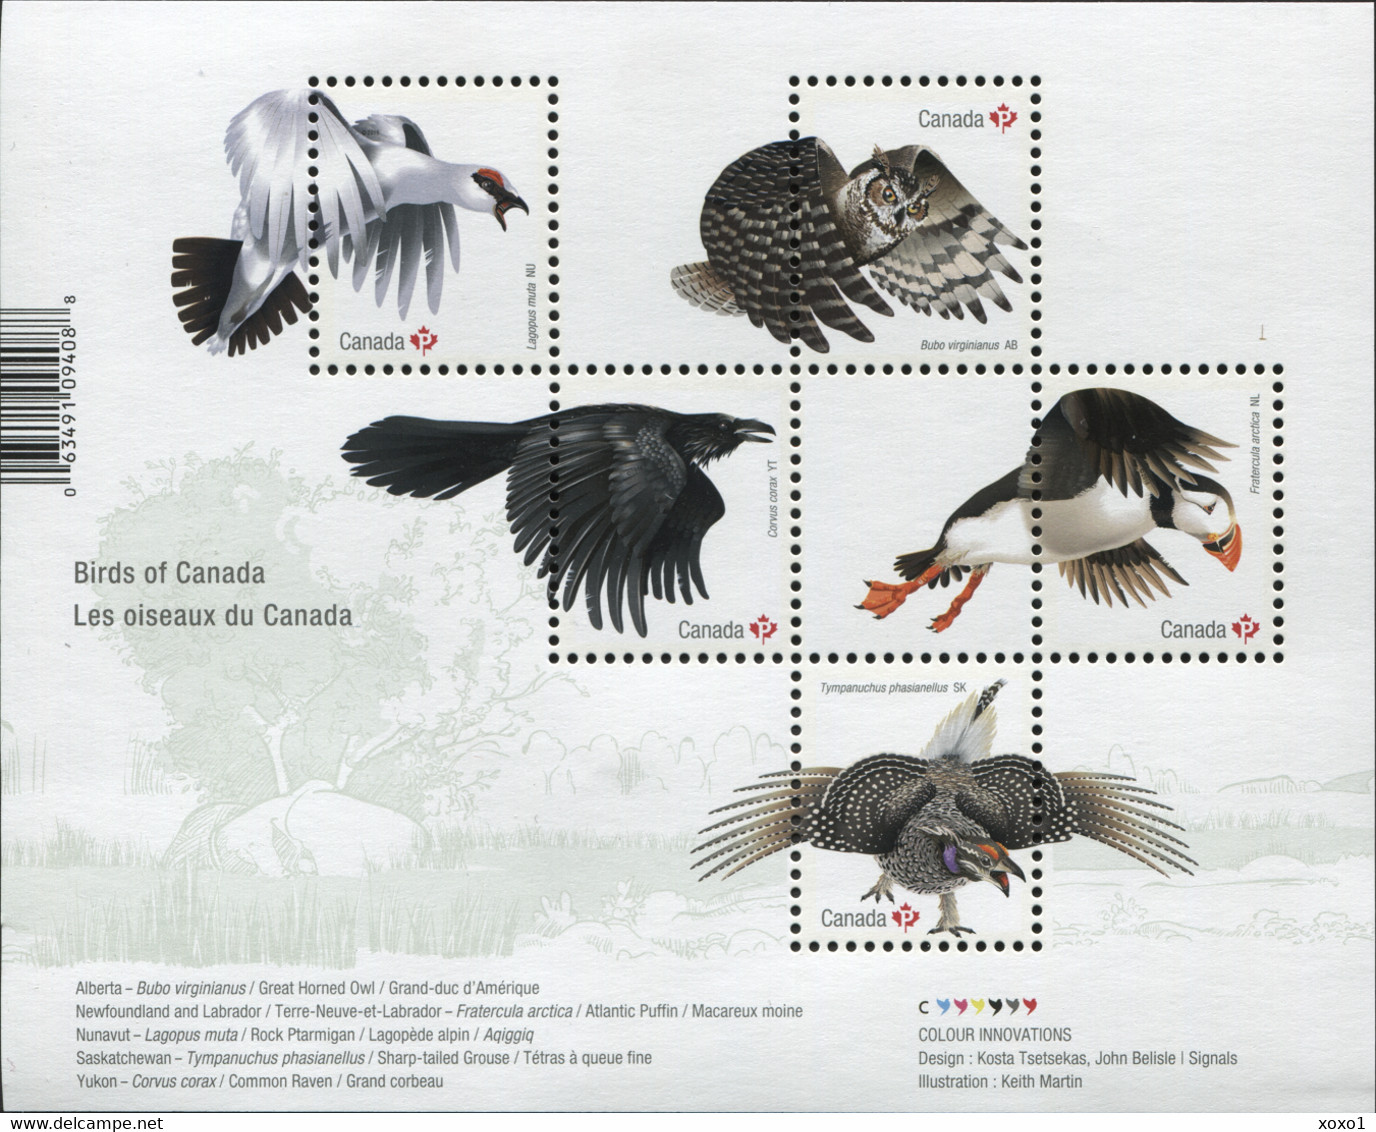 Canada 2016 MiNr. 3391 - 3395 (Block 238) Kanada Birds - I , Owls Puffins S\sh MNH ** 9,50 € - Eulenvögel